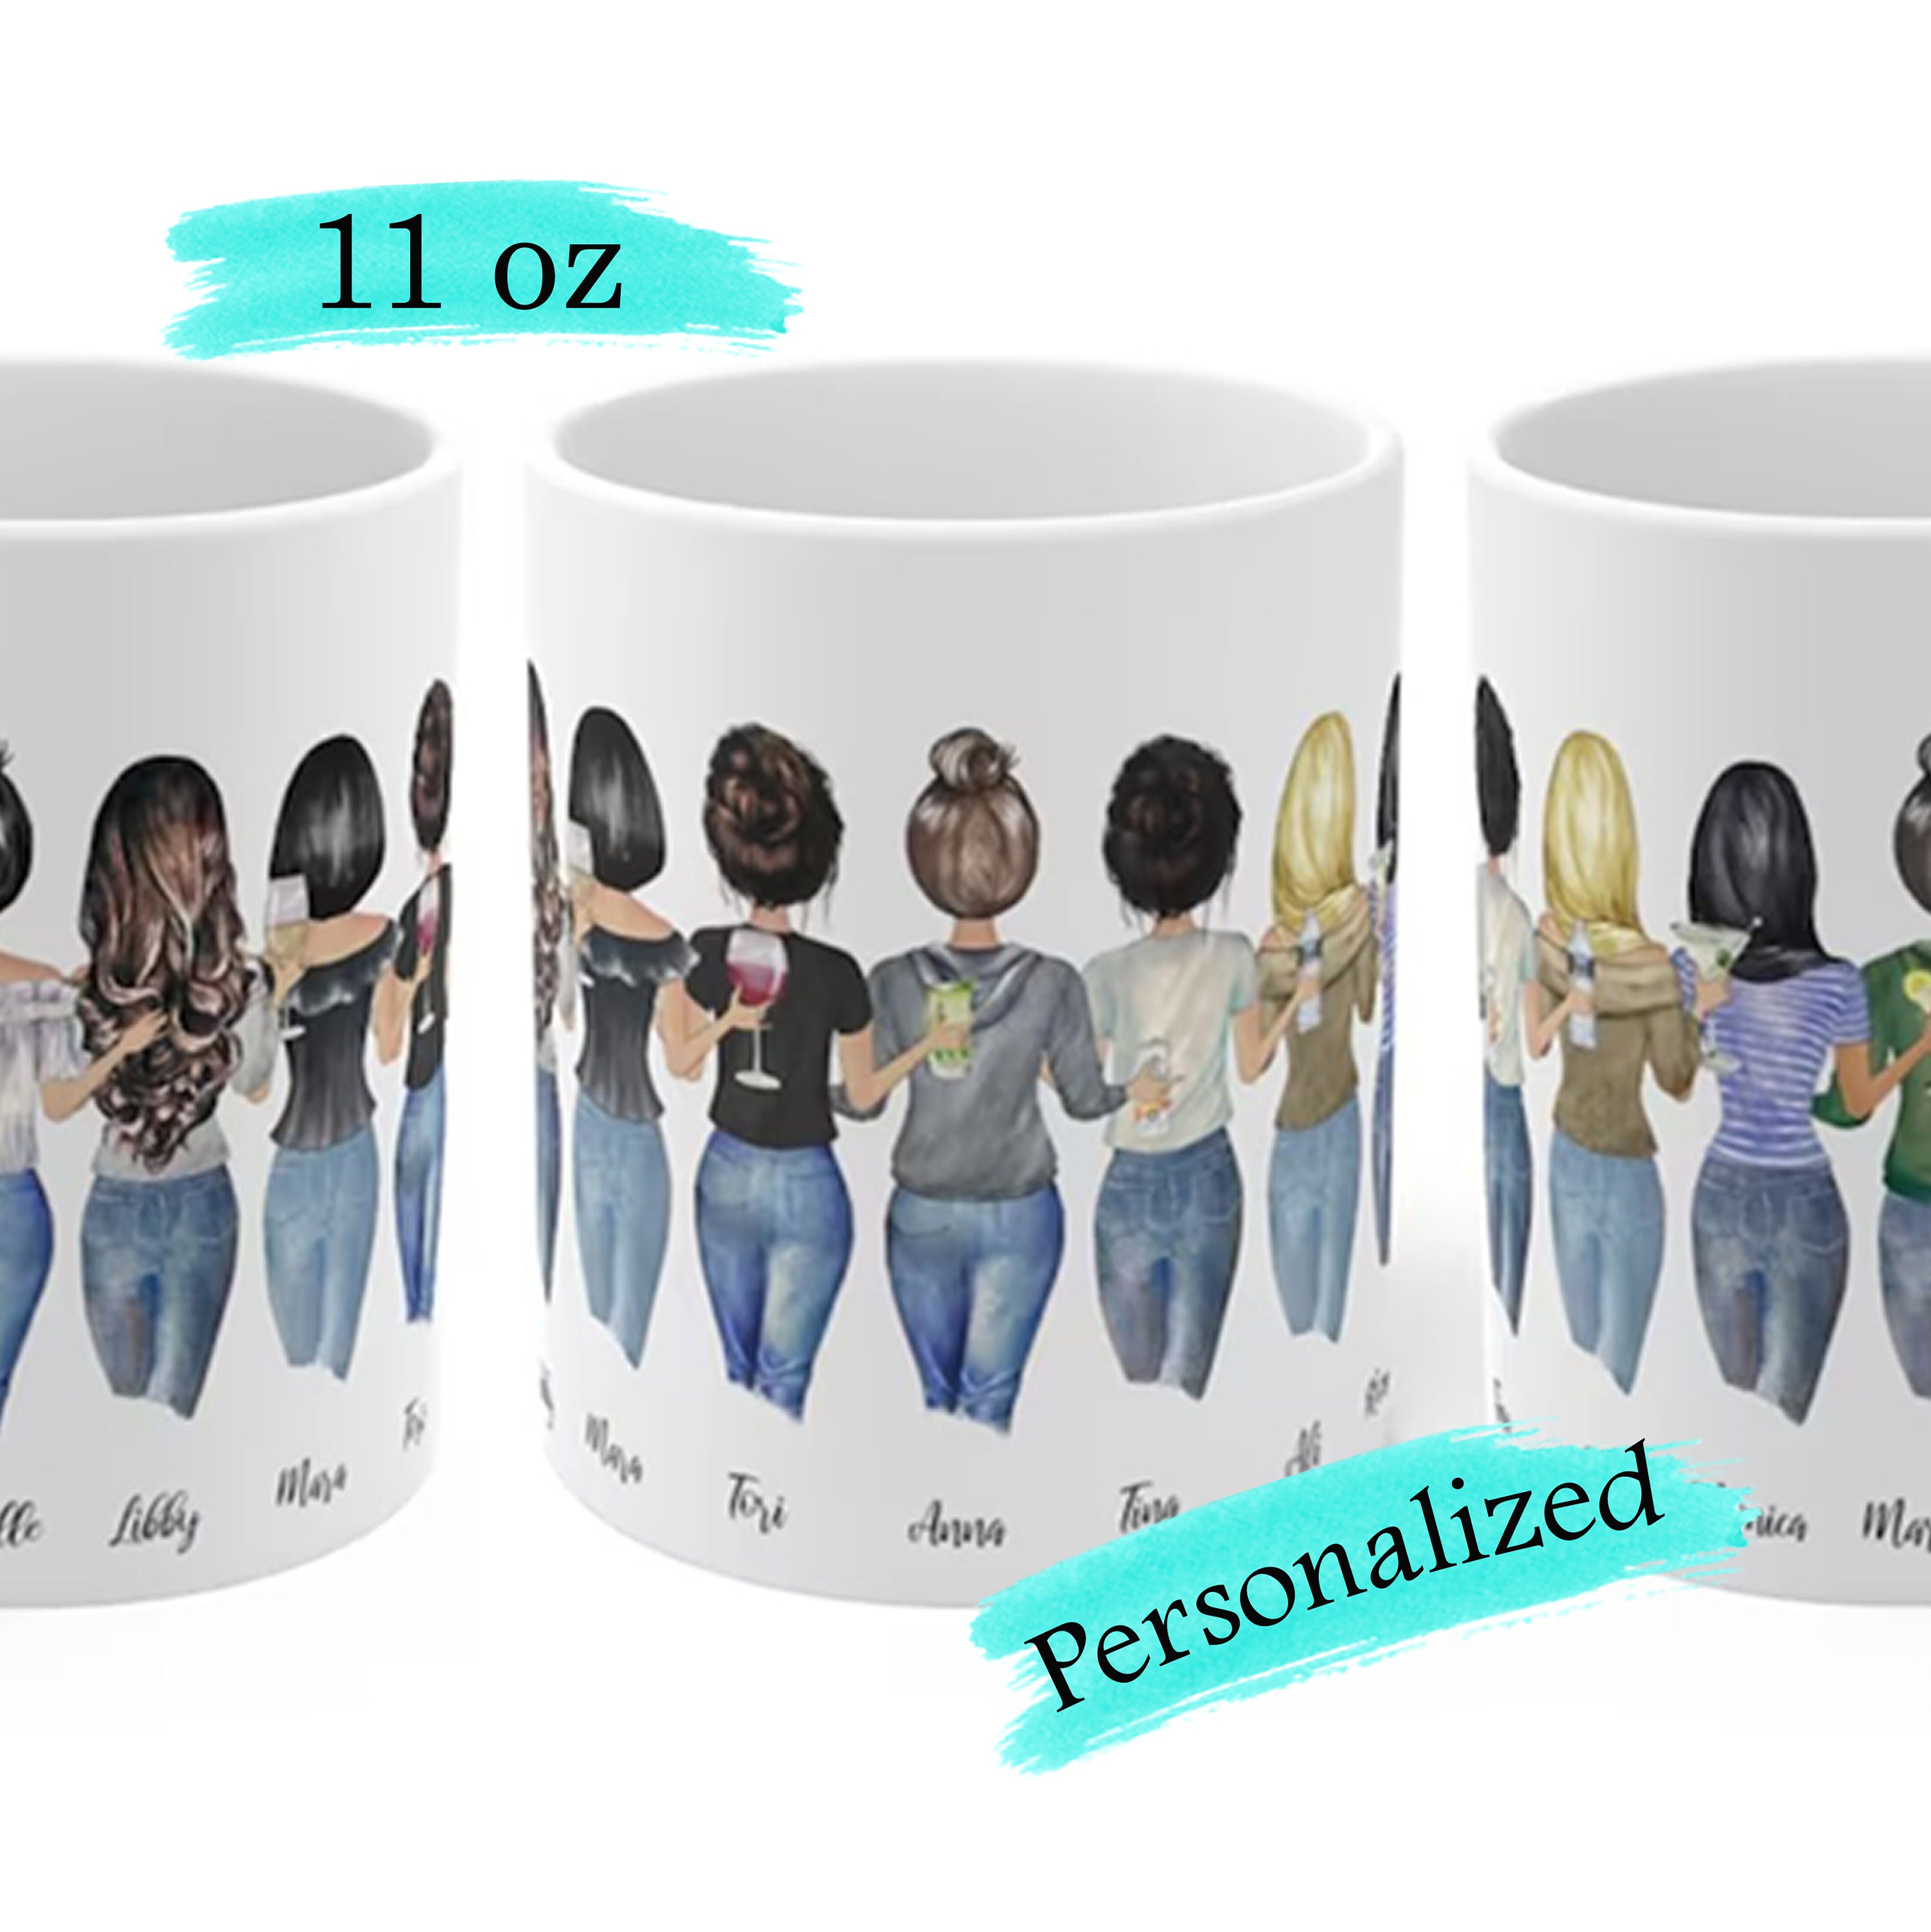 Friends mug, Chibi friends mug, Friends serie tv show, 15 oz mug, Perfect  gift, Gift for him, Gift for her